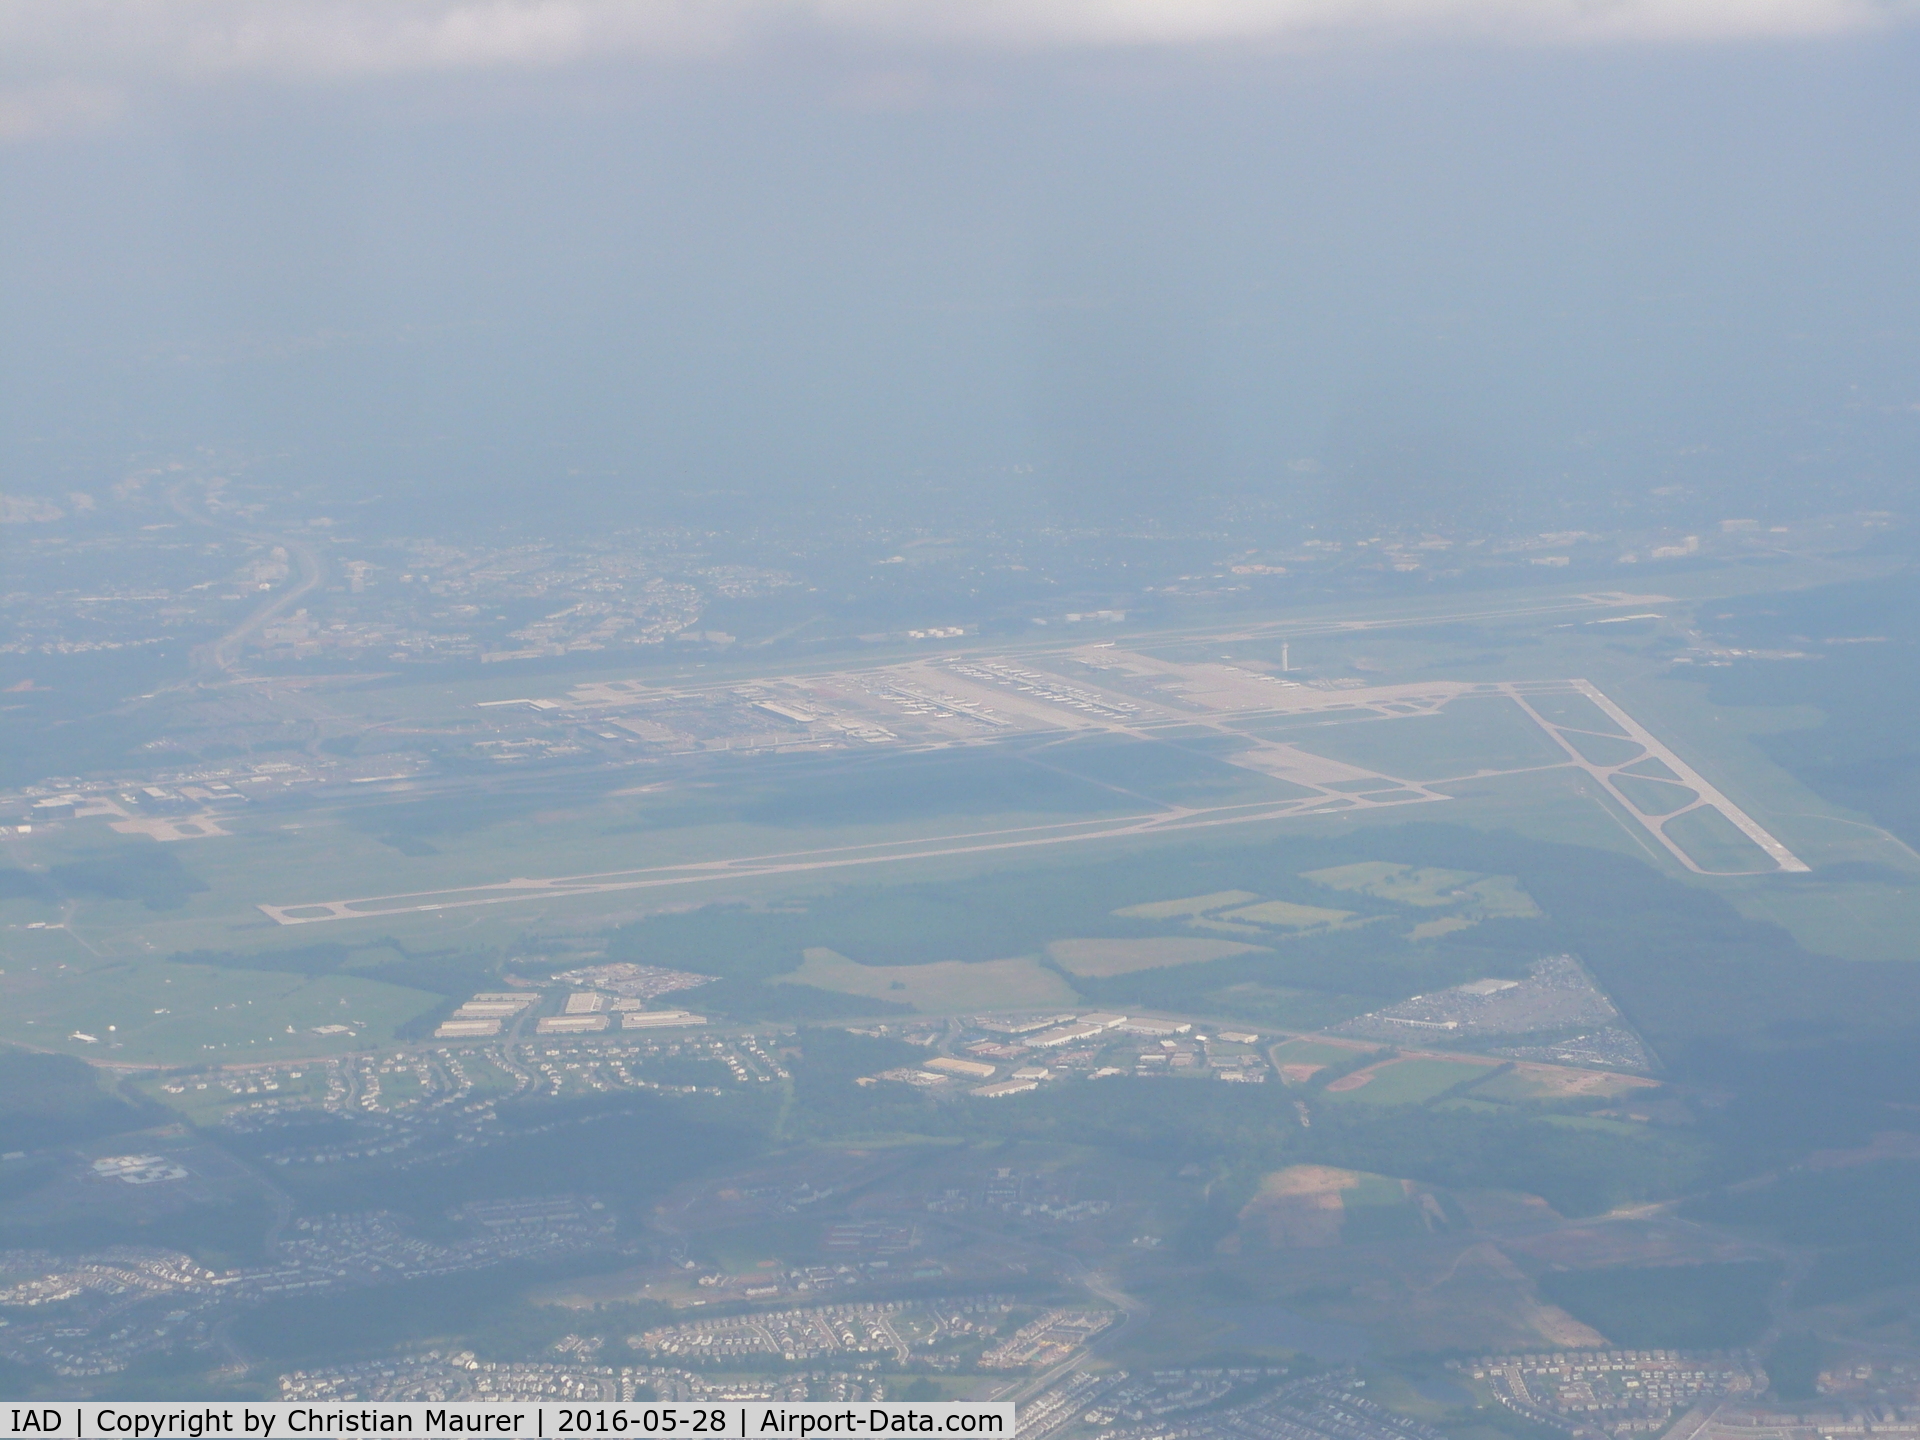 Washington Dulles International Airport (IAD) - Washington Dulles IAD taken from a ERJ175